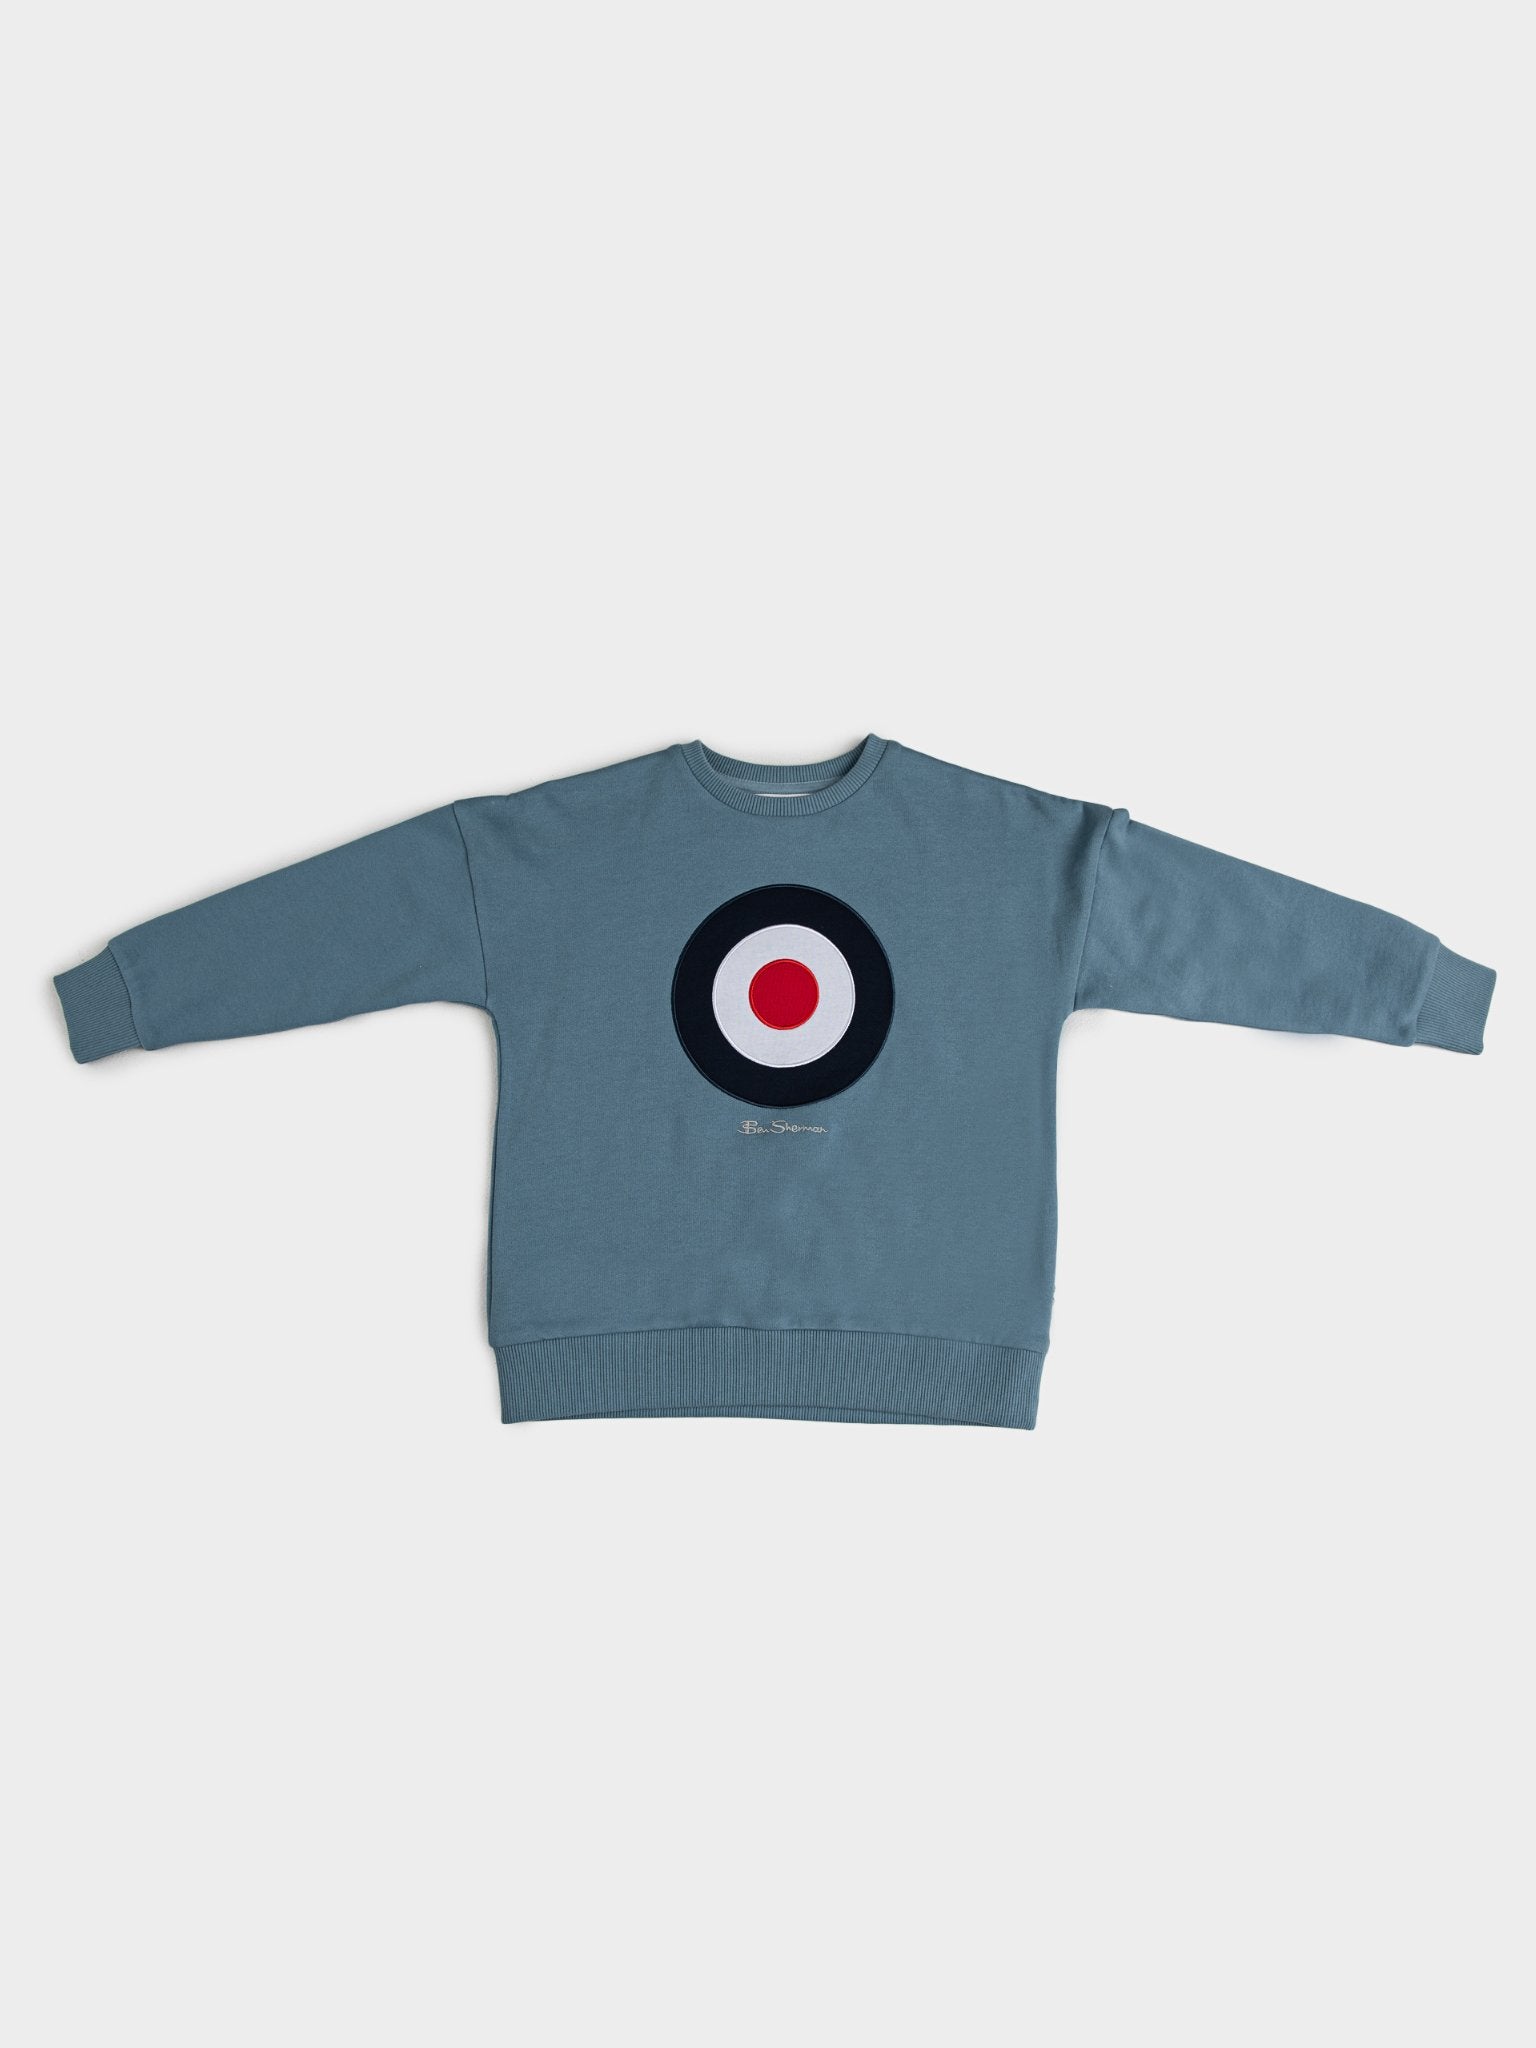 Kids Target Crew Sweater - Citadel